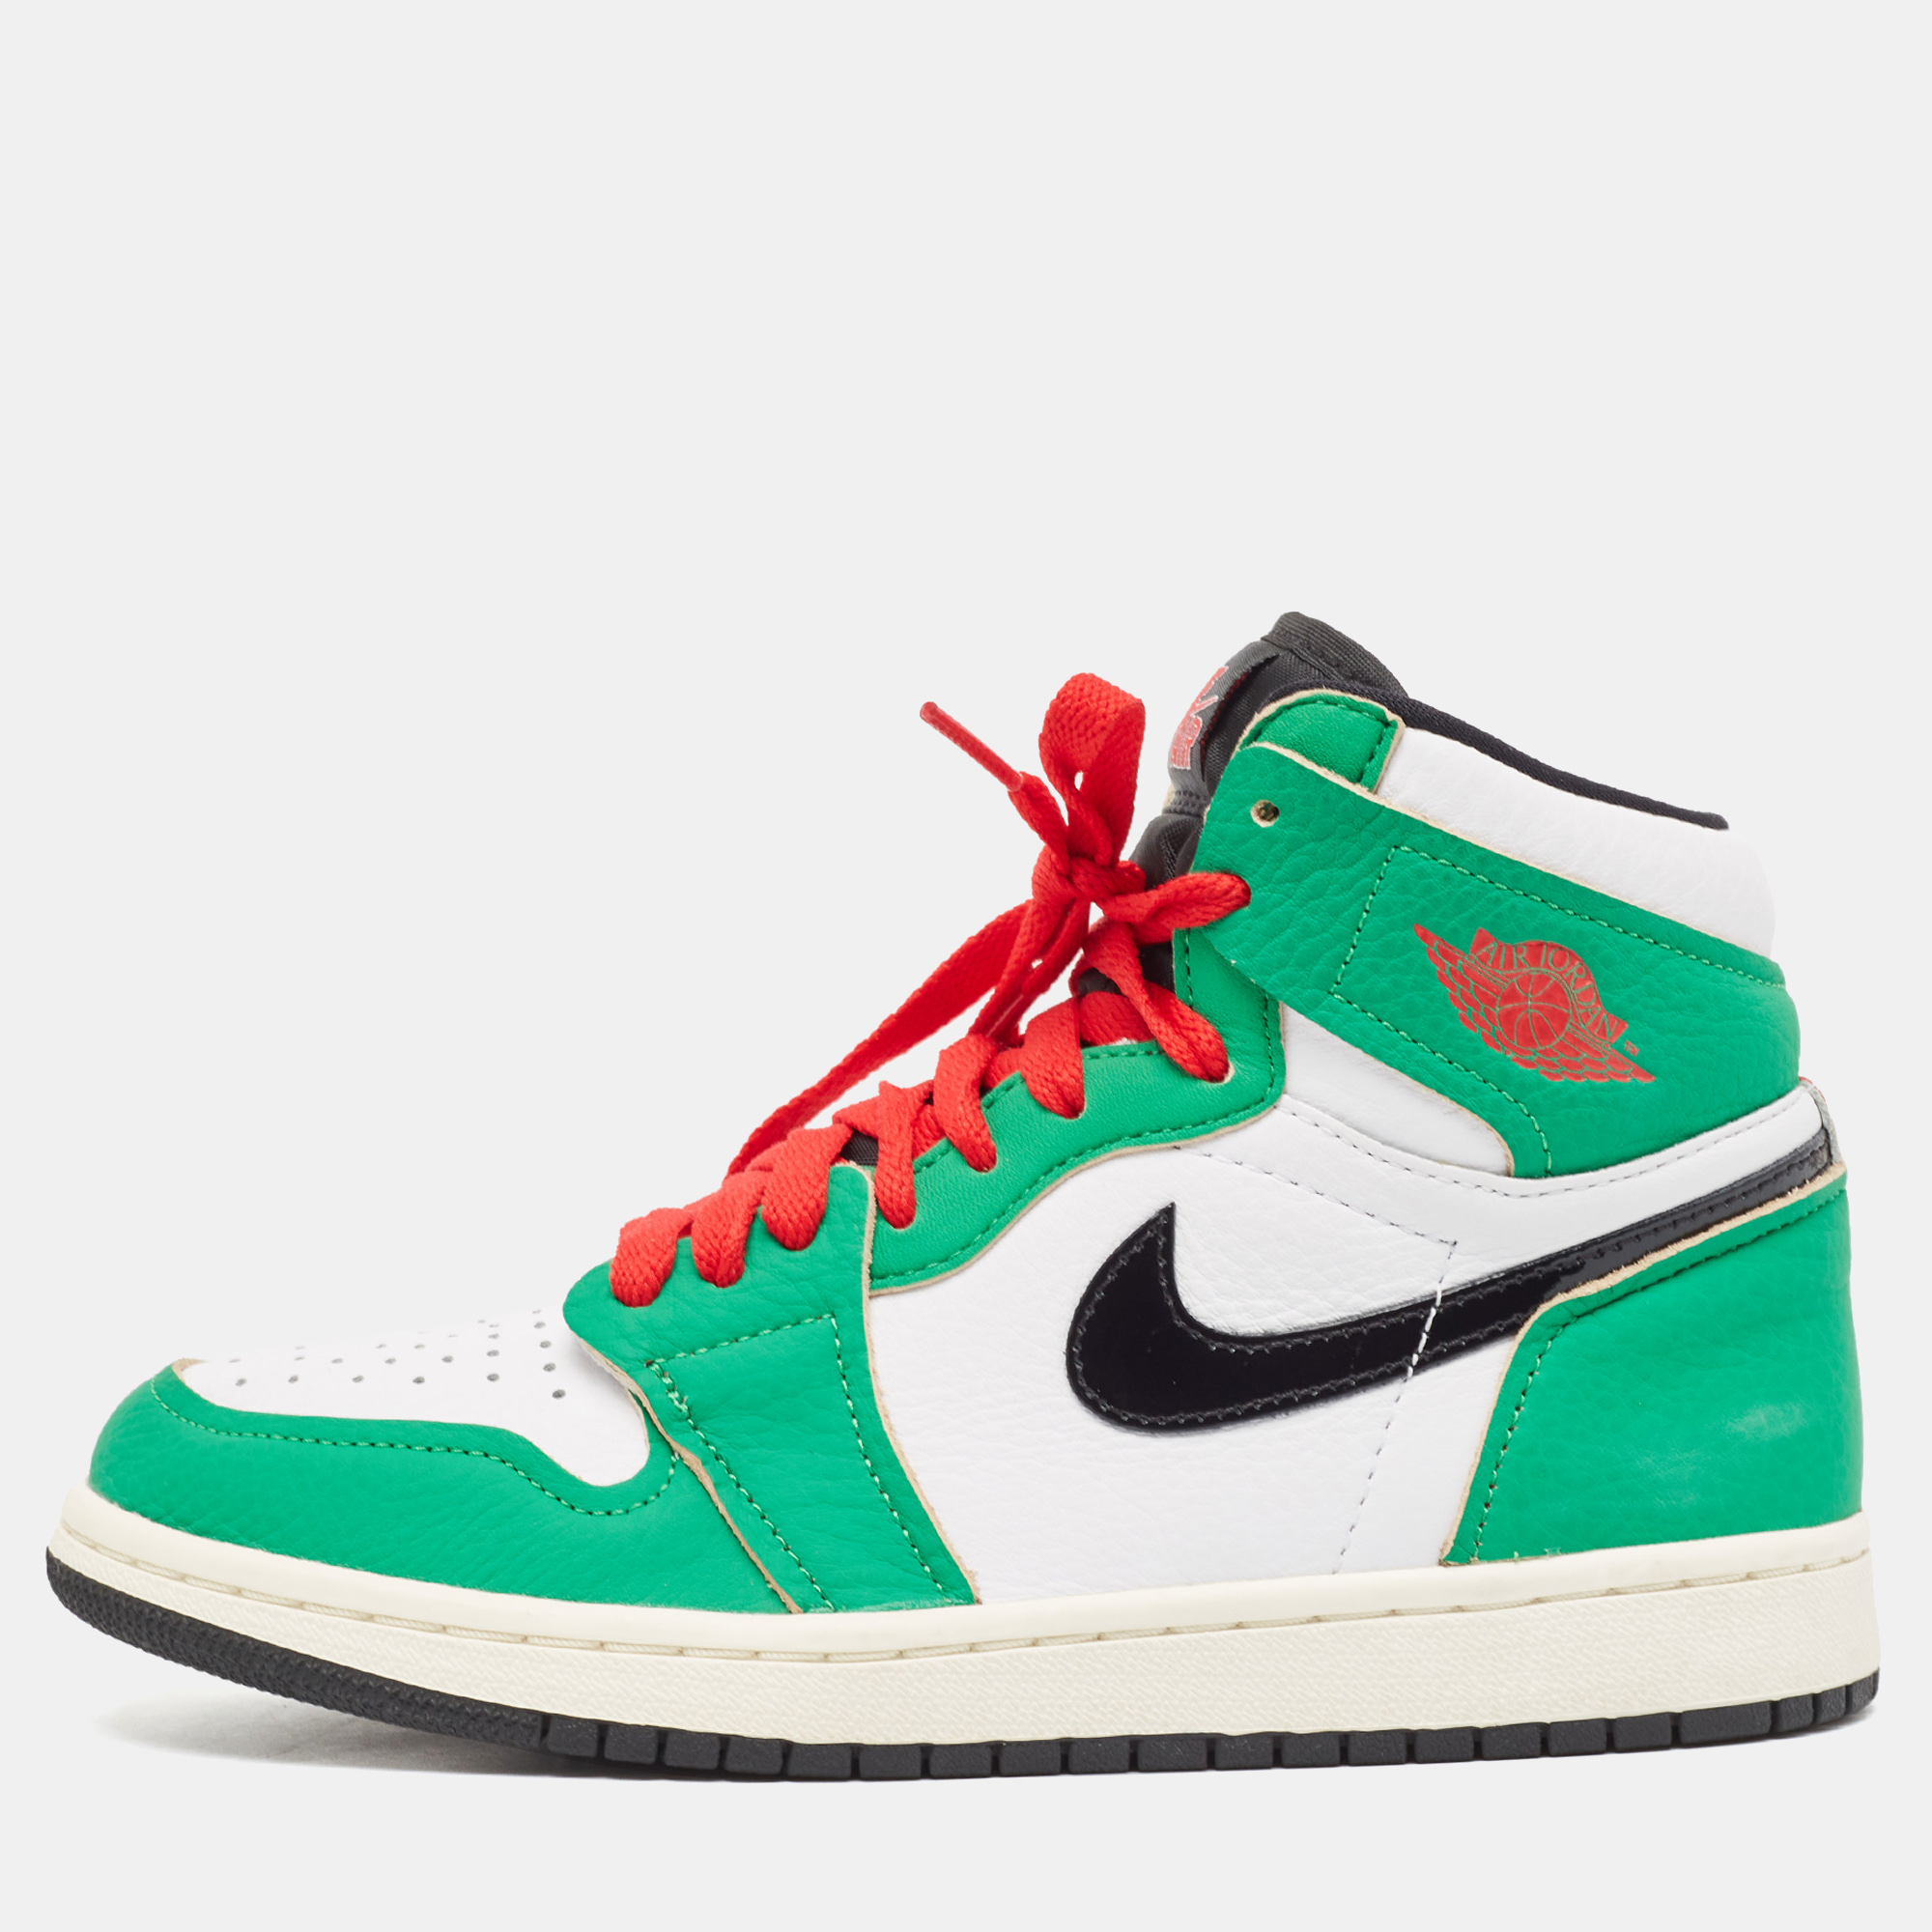 

Air Jordans Green/White Leather Air Jordan 1 Lucky Green Sneakers Size